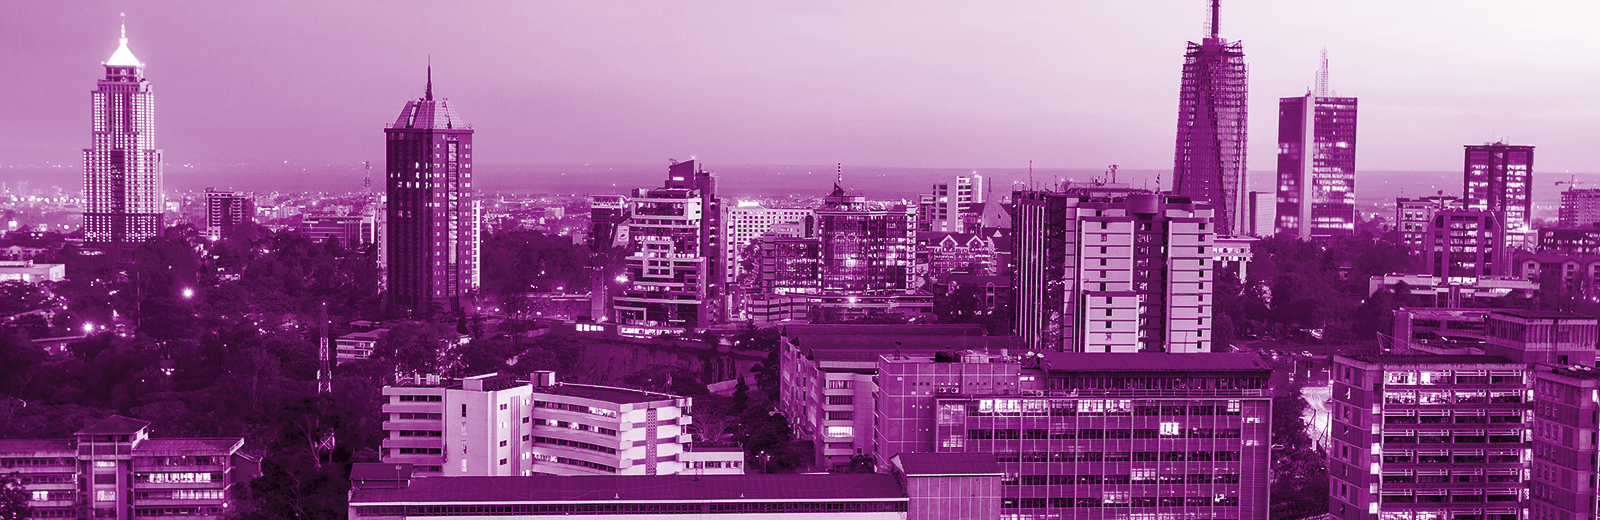 City landscape with a purple filter 